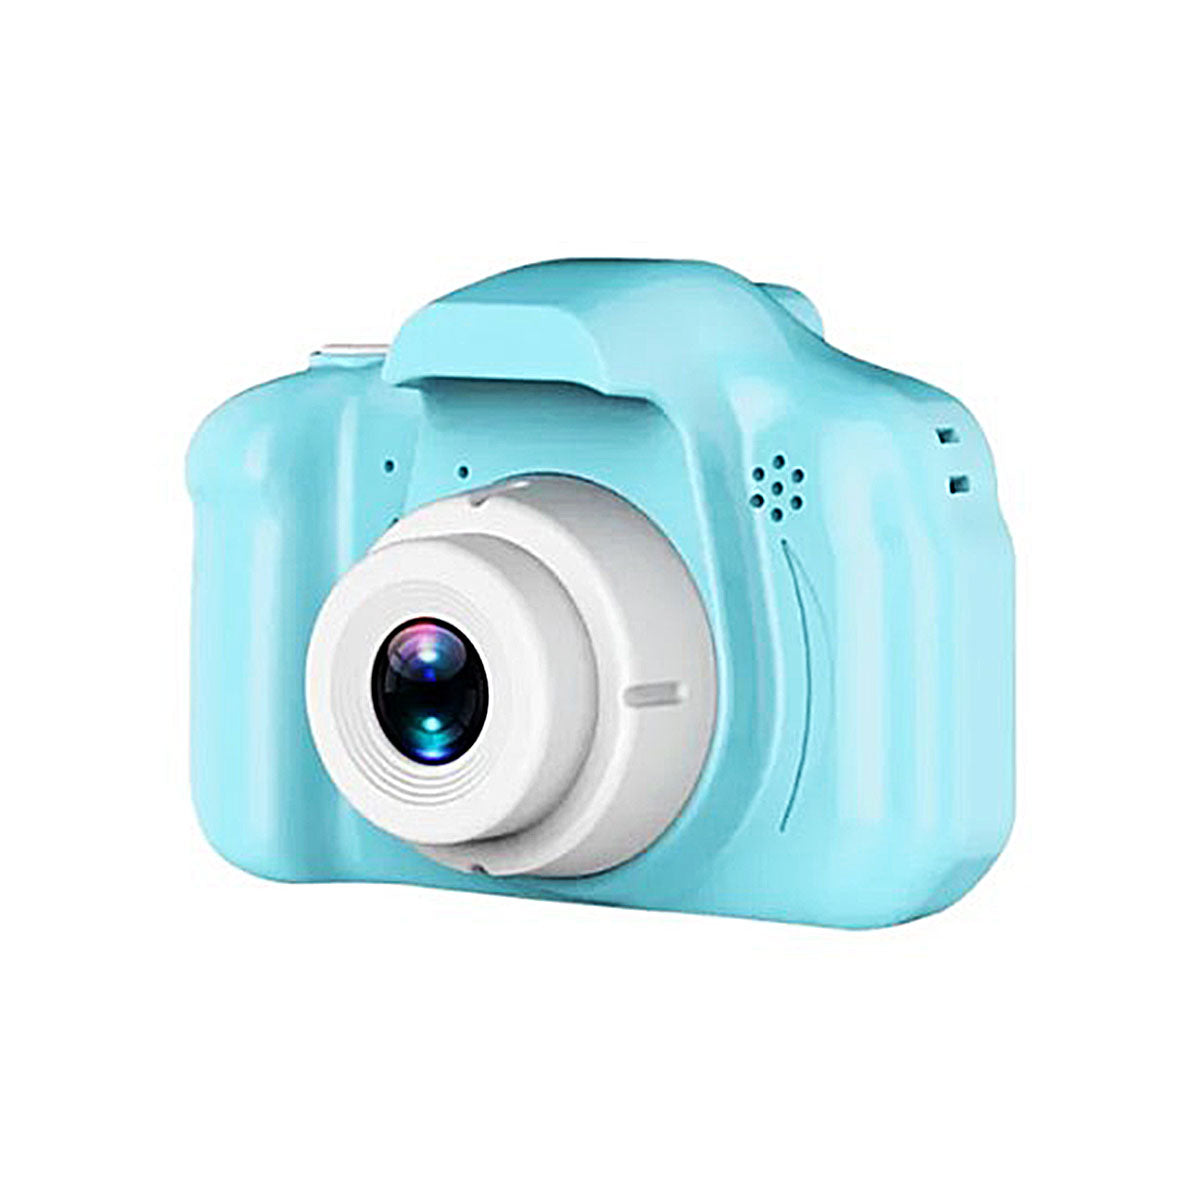 Children's Mini Waterproof HD Camera Toy 2 inch Screen